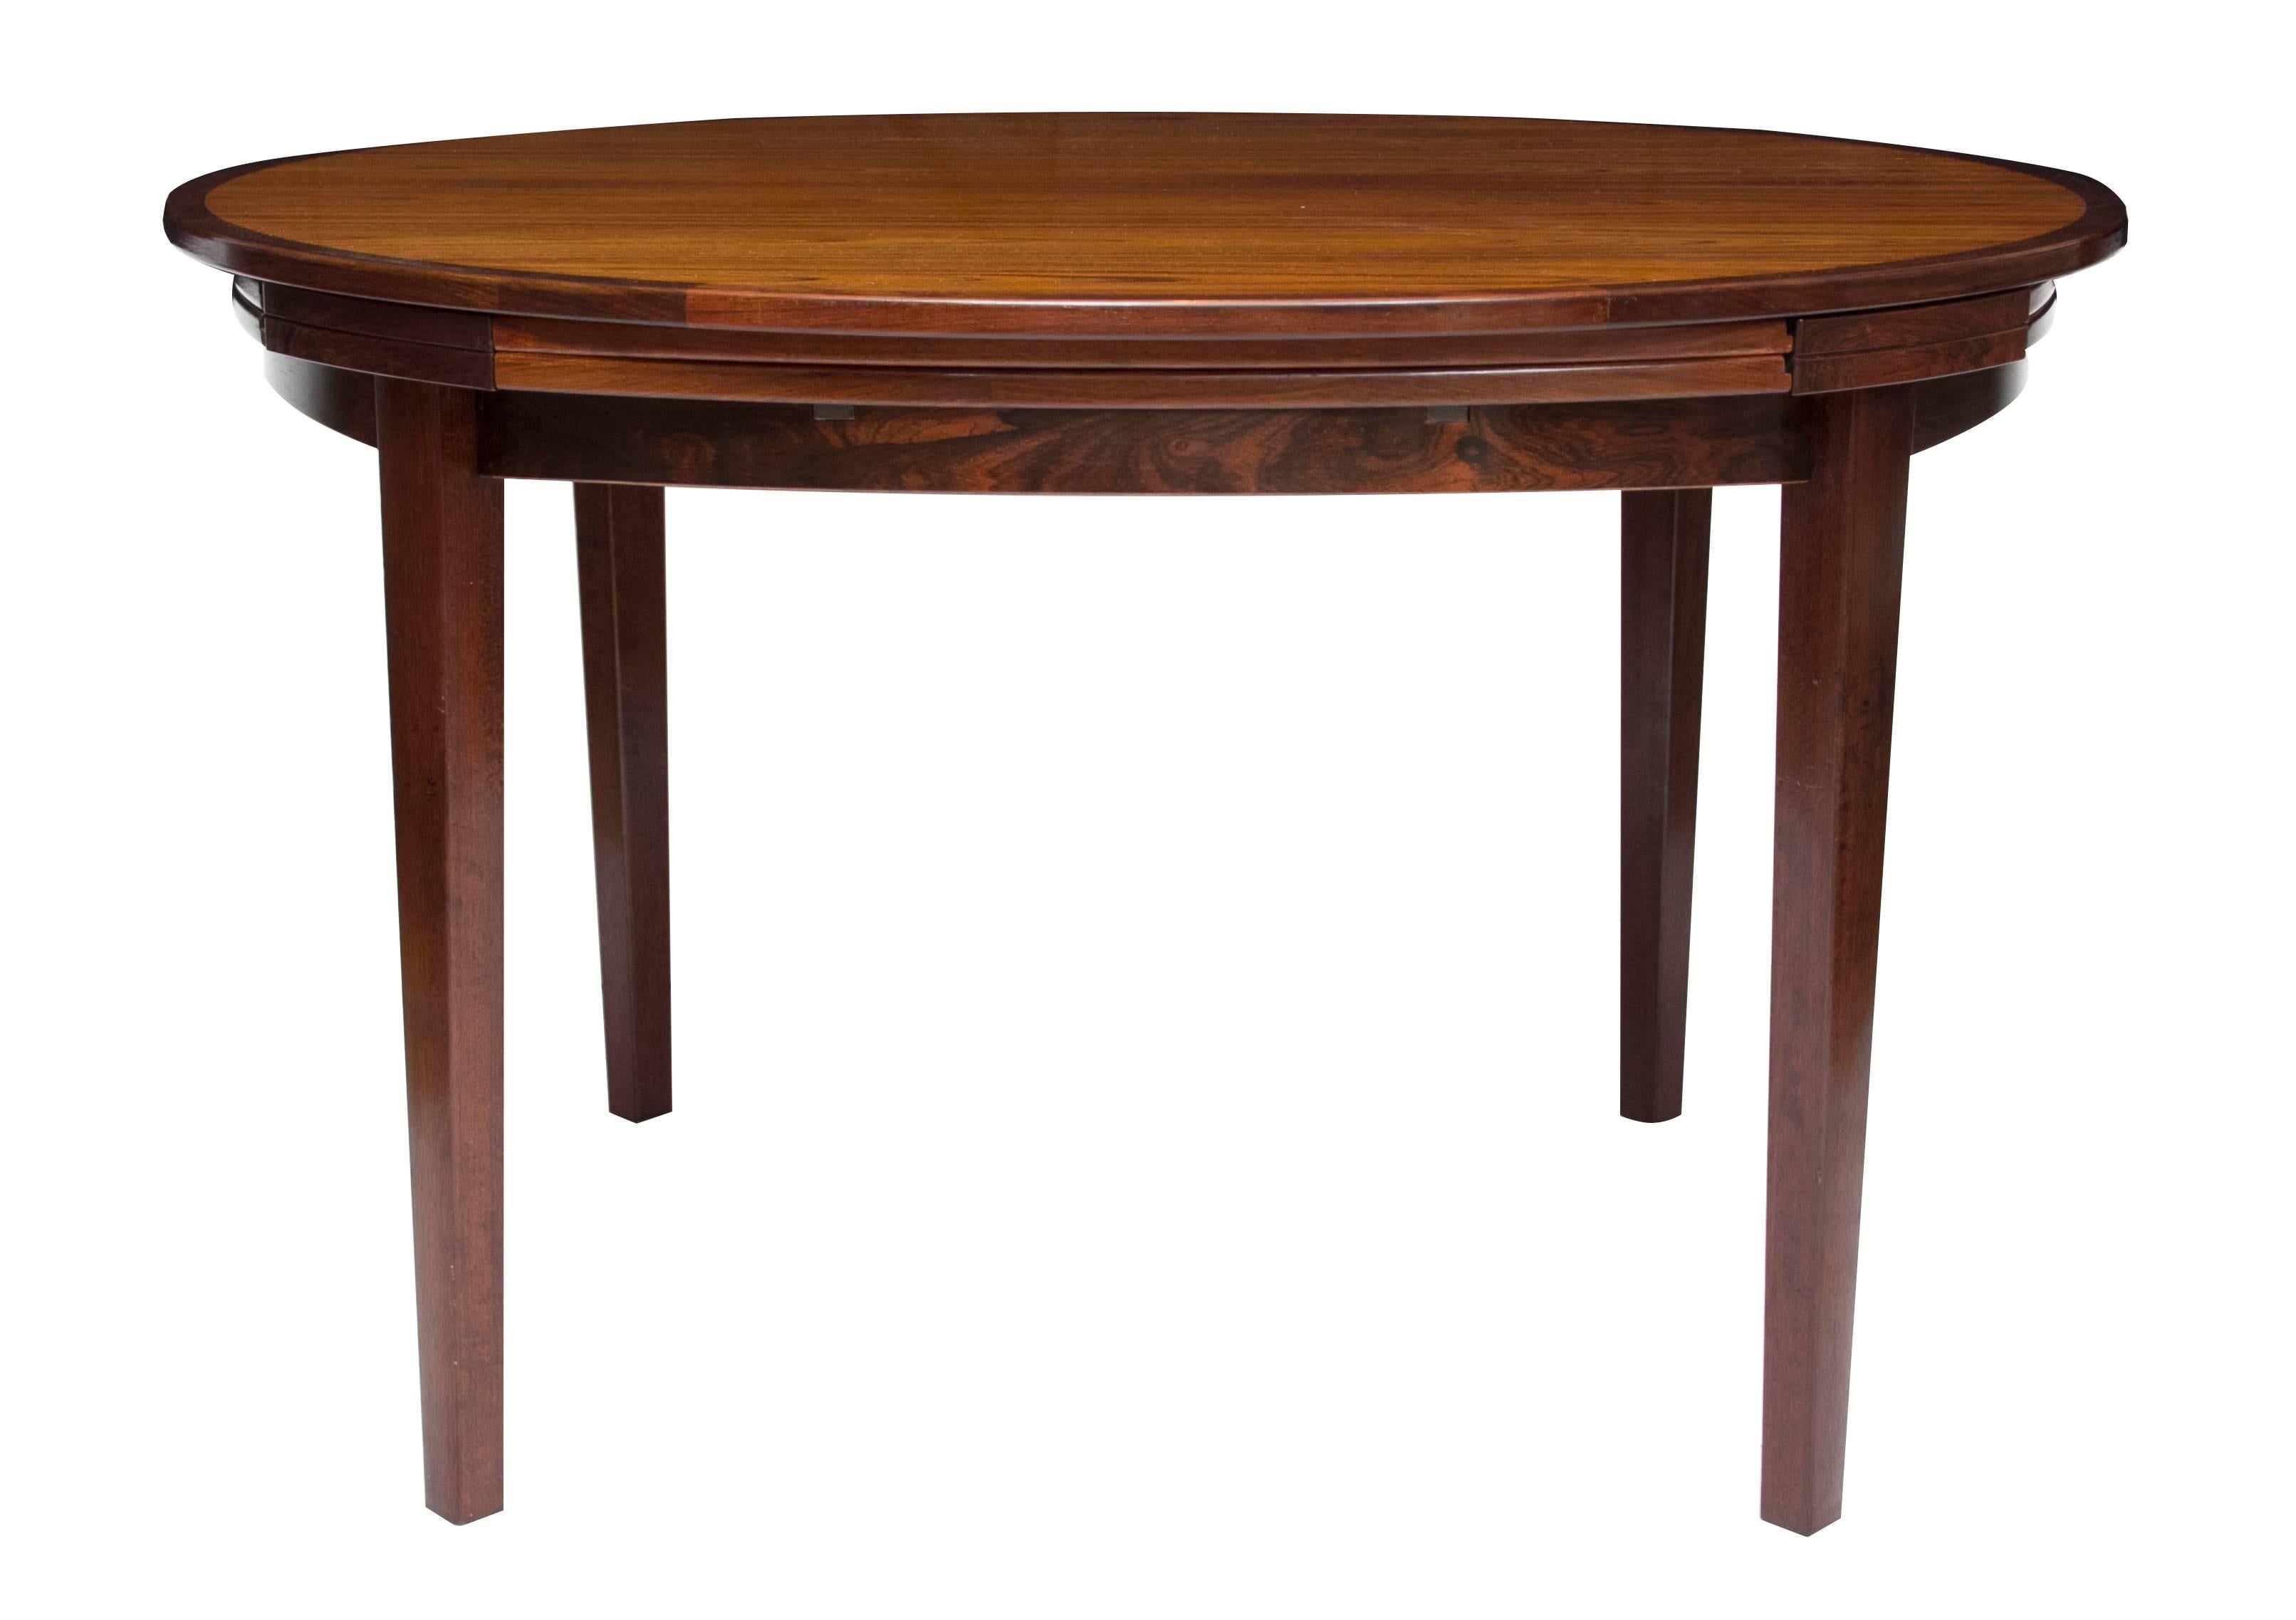 Rosewood circular extending dining table. Measuring 120 cm diameter extending to 176 cm.